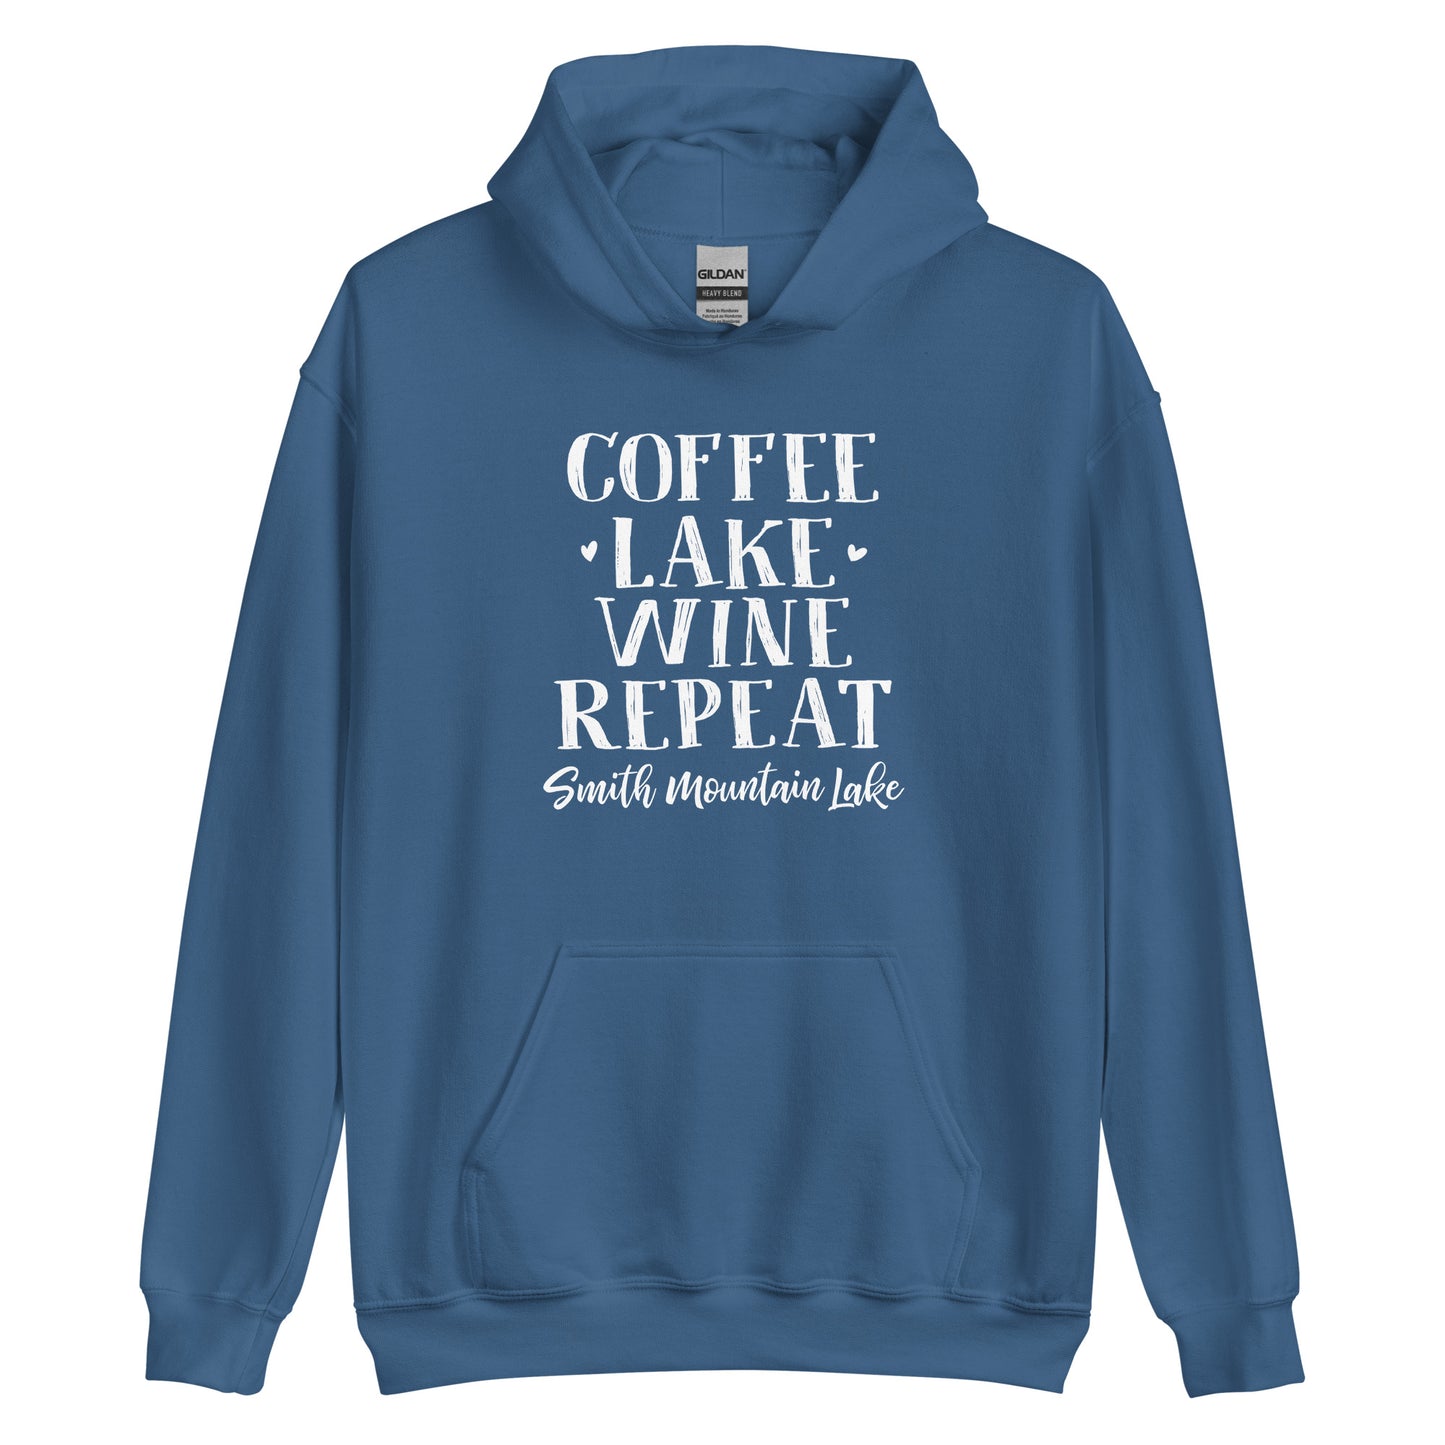 Coffee, Lake, Wine Repeat - Smith Mountain Lake Unisex Hoodie Sweatshirt